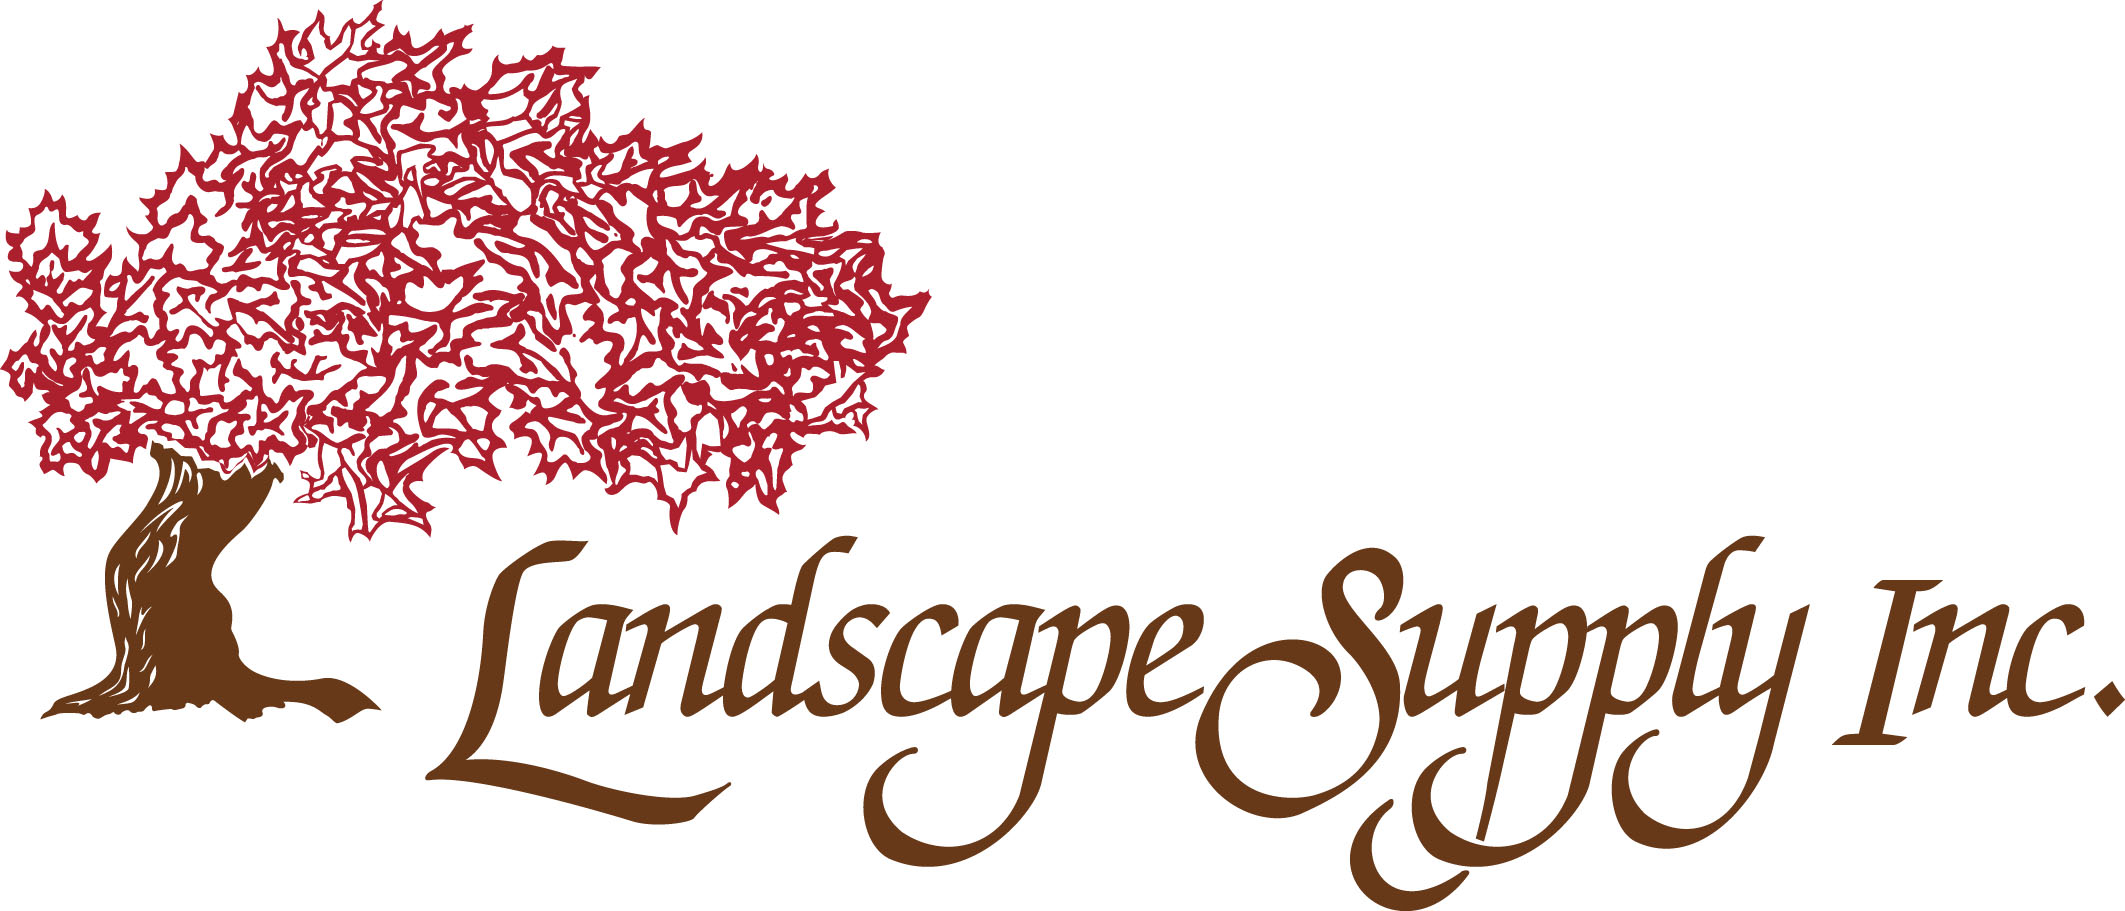 Landscape Supply Inc logo